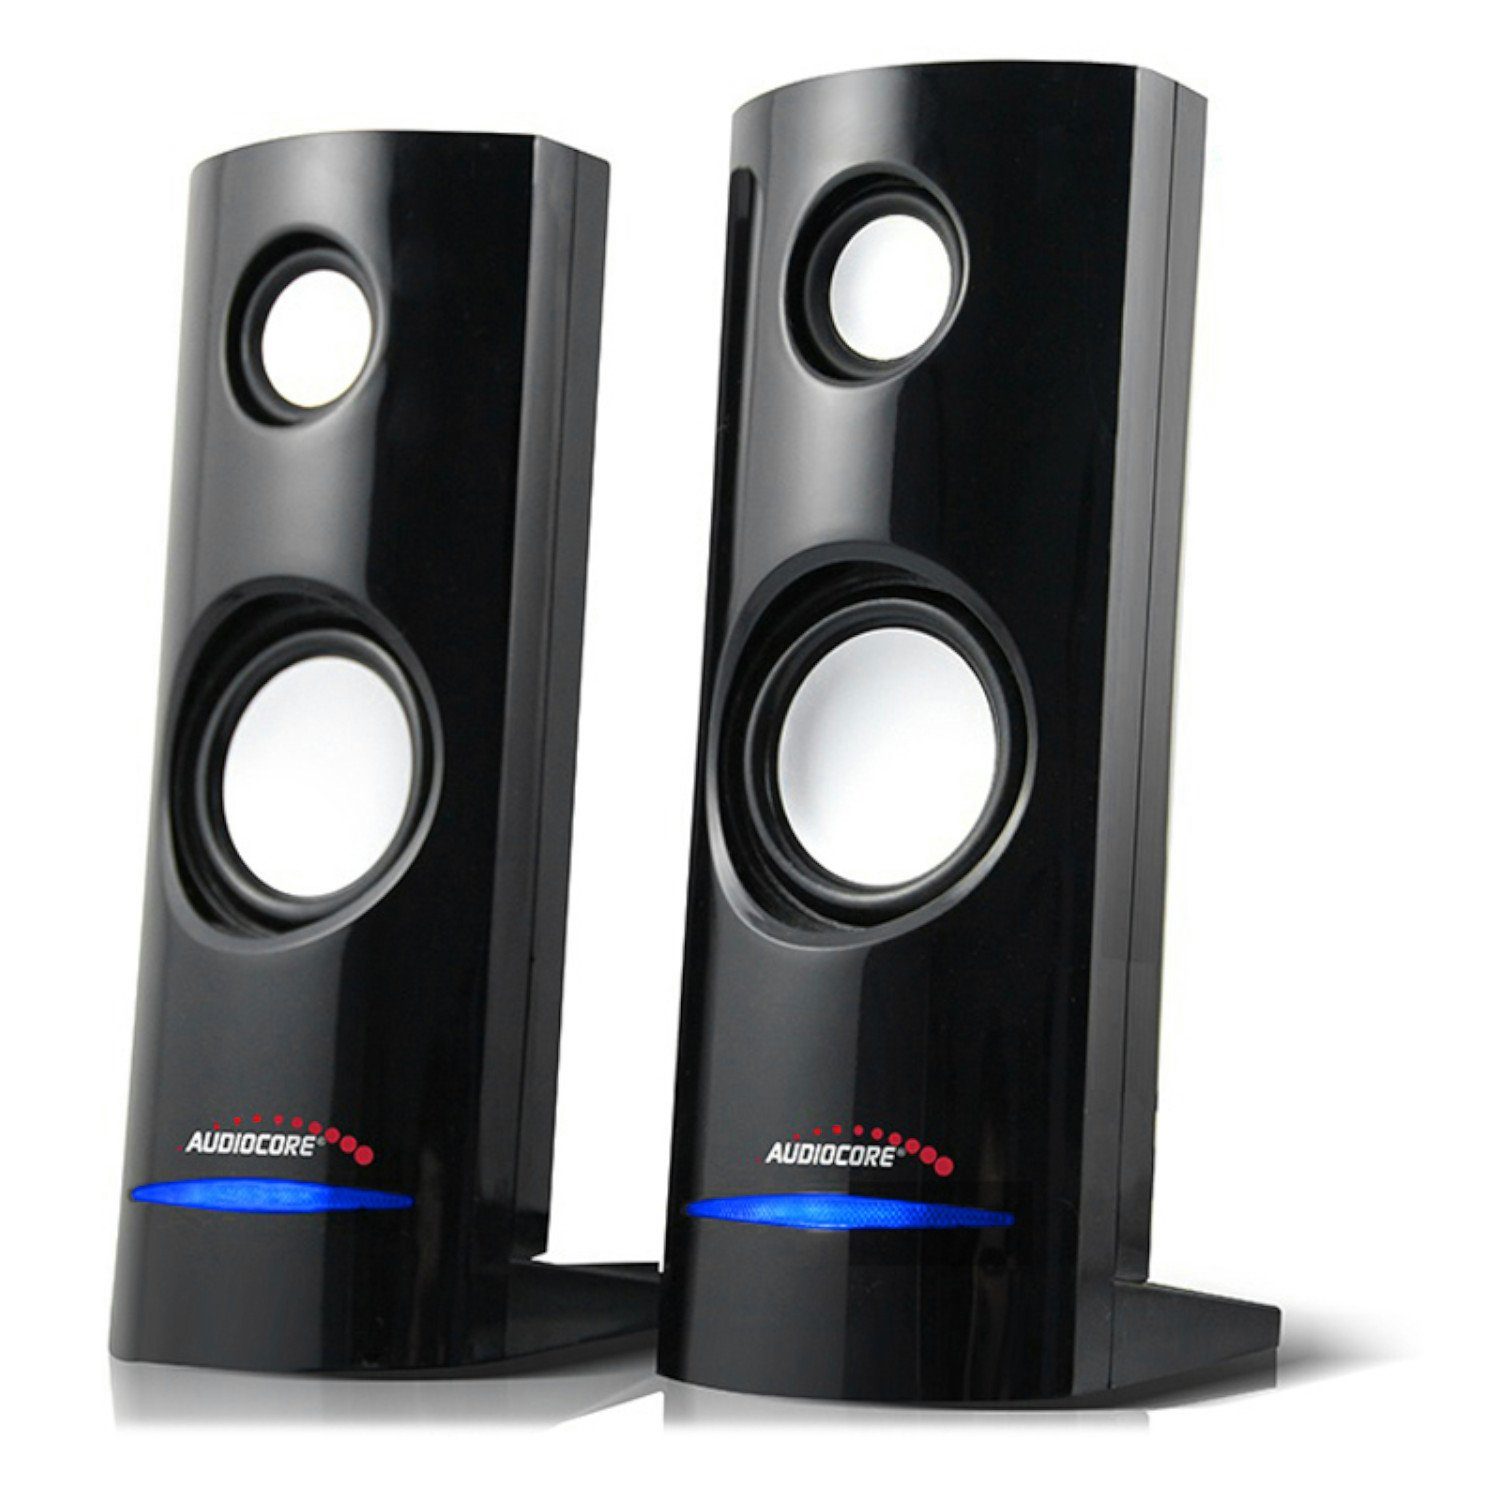 Audiocore AC860 Stereo, 2.0 PC-Lautsprecher (USB, AUX-Kabel, 8 W, Lautstärkeregelung, Blaue LED-Beleuchtung) | PC-Lautsprecher